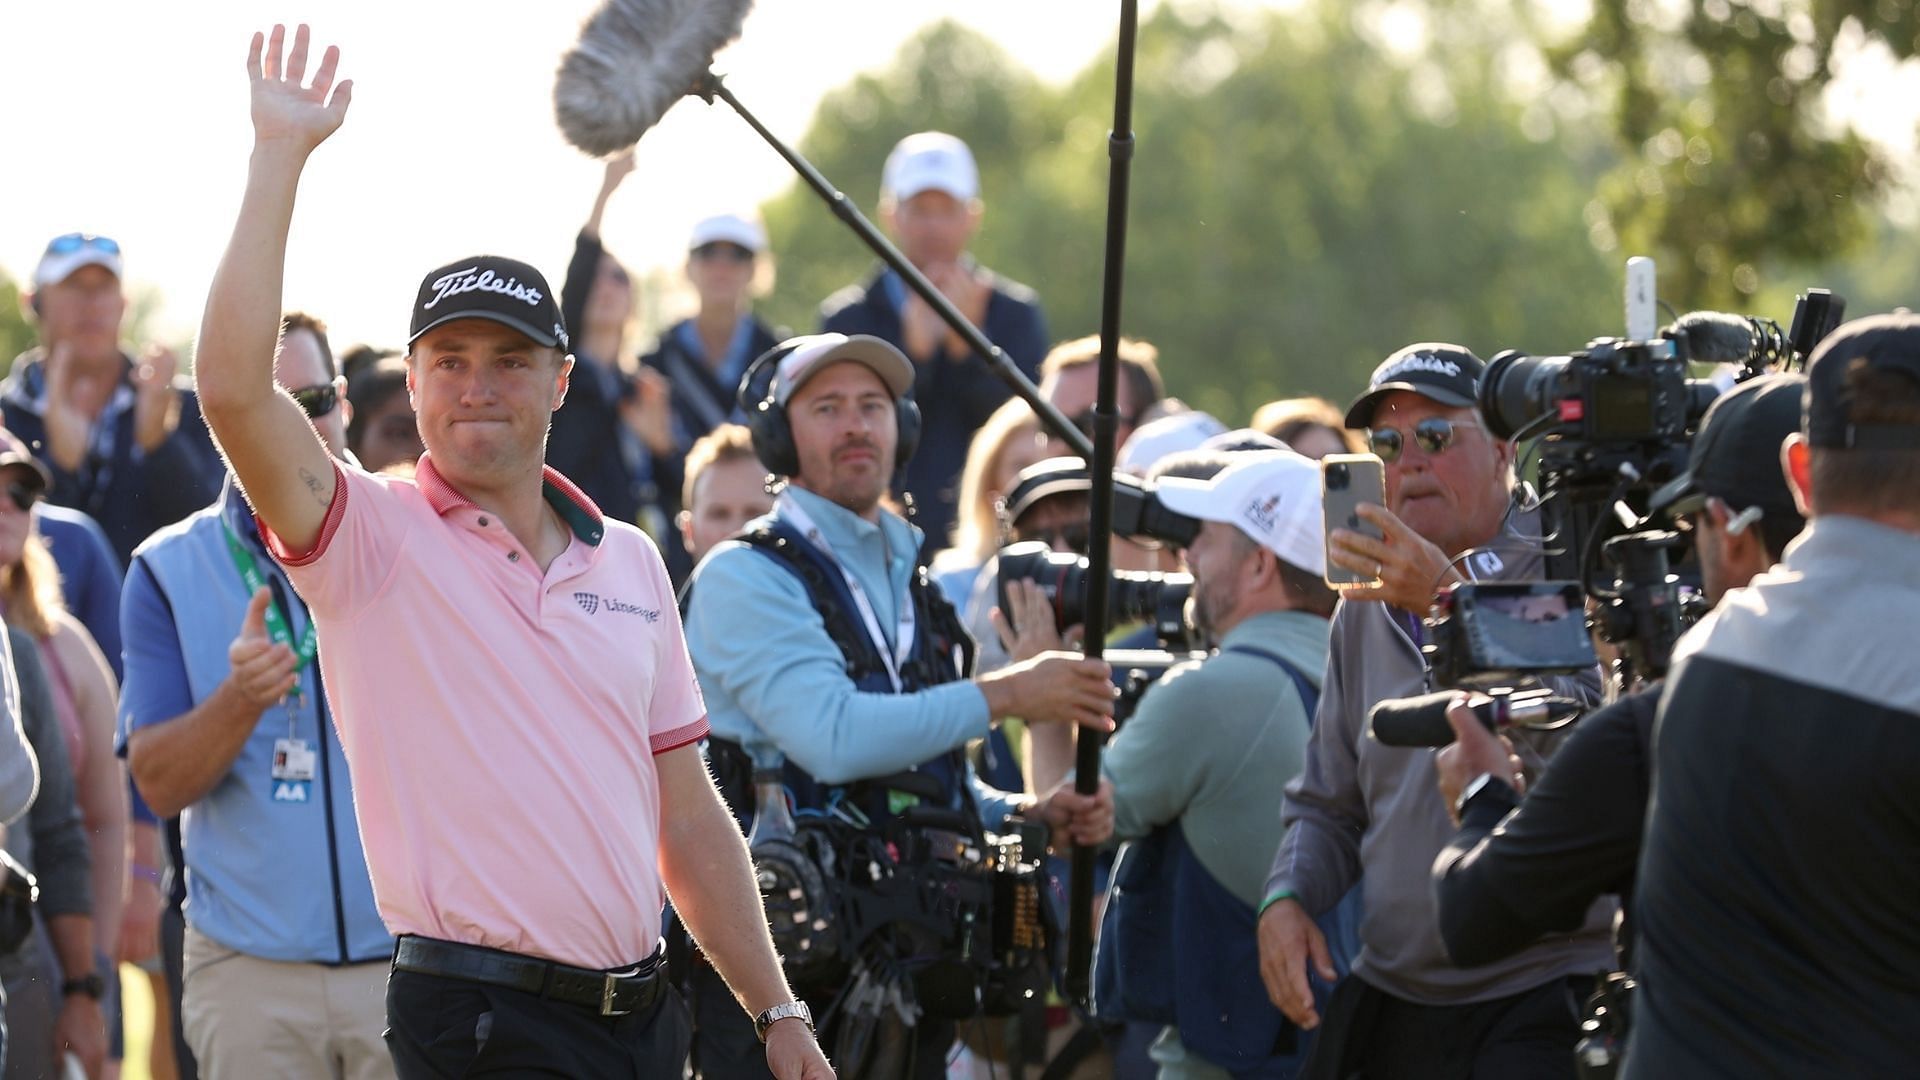 2022 PGA Championship Justin Thomas next to TV cameras covering his triumph (image via Golf Post).